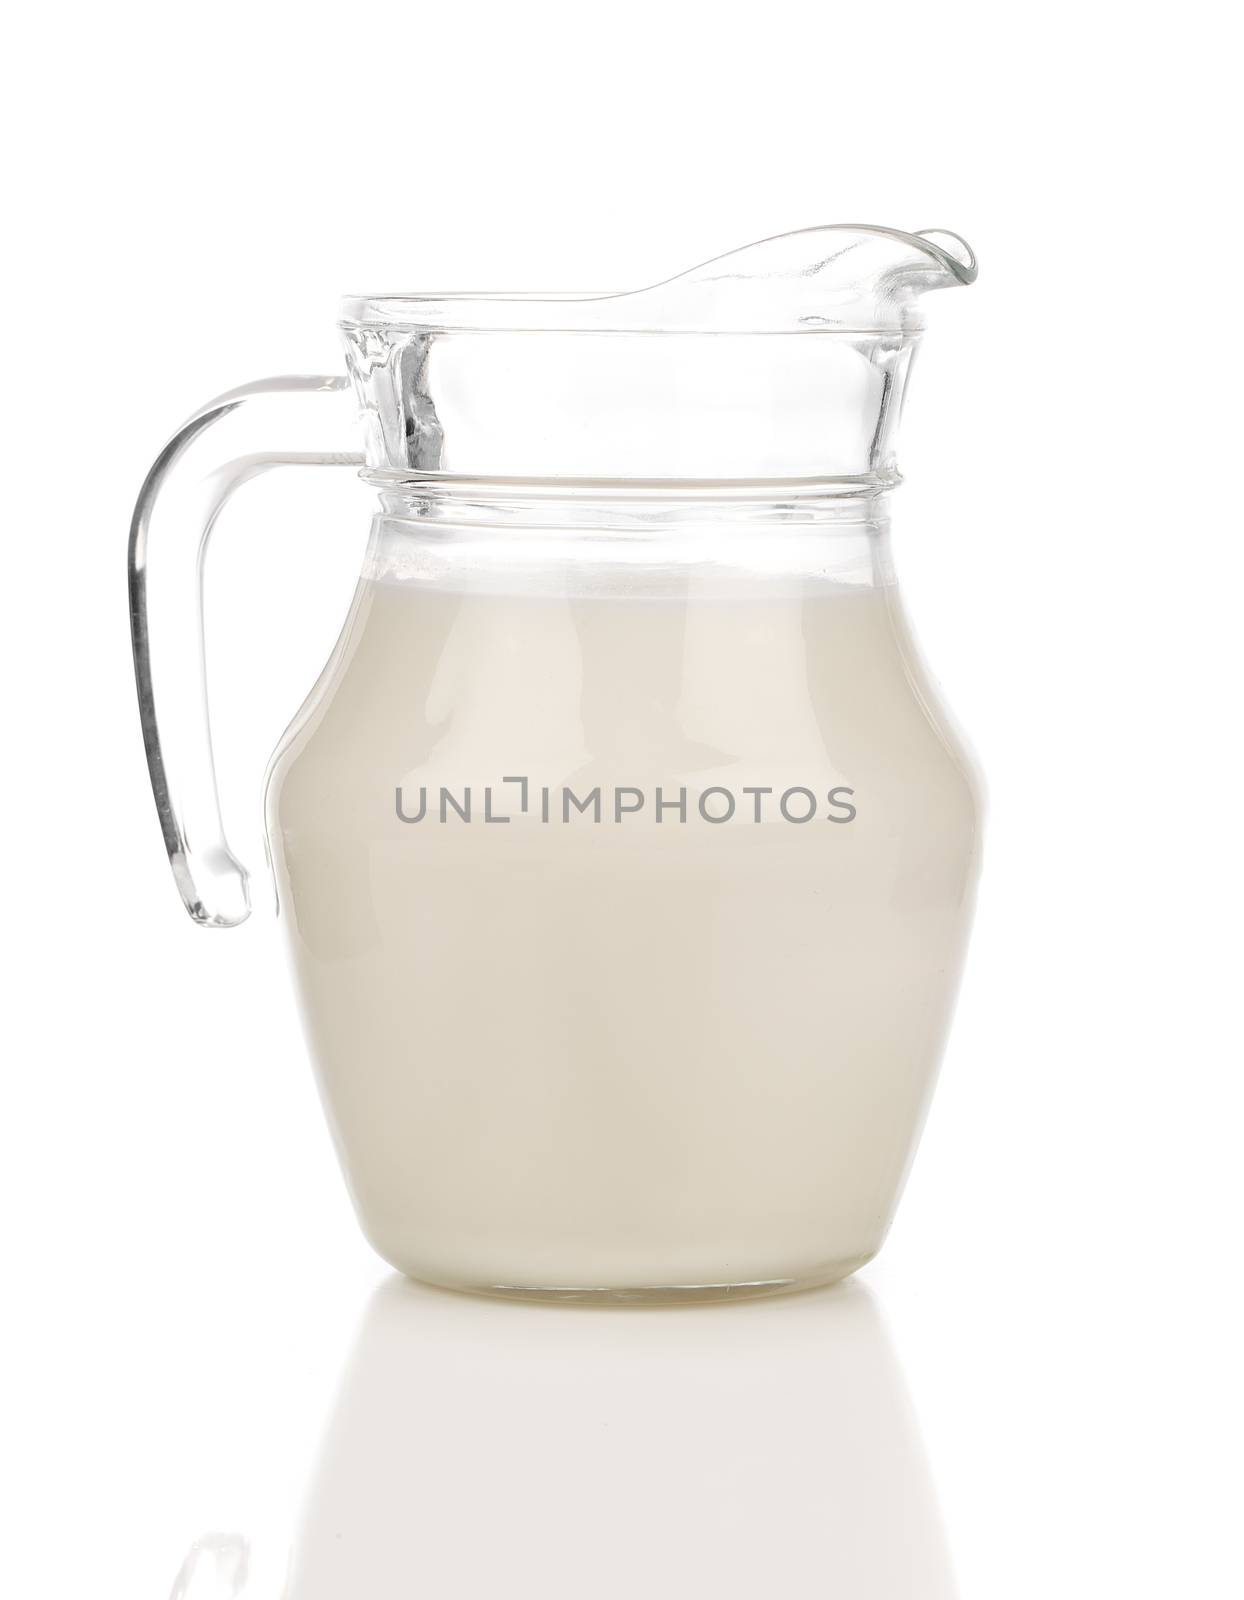 Pitcher of milk on a white background by motorolka